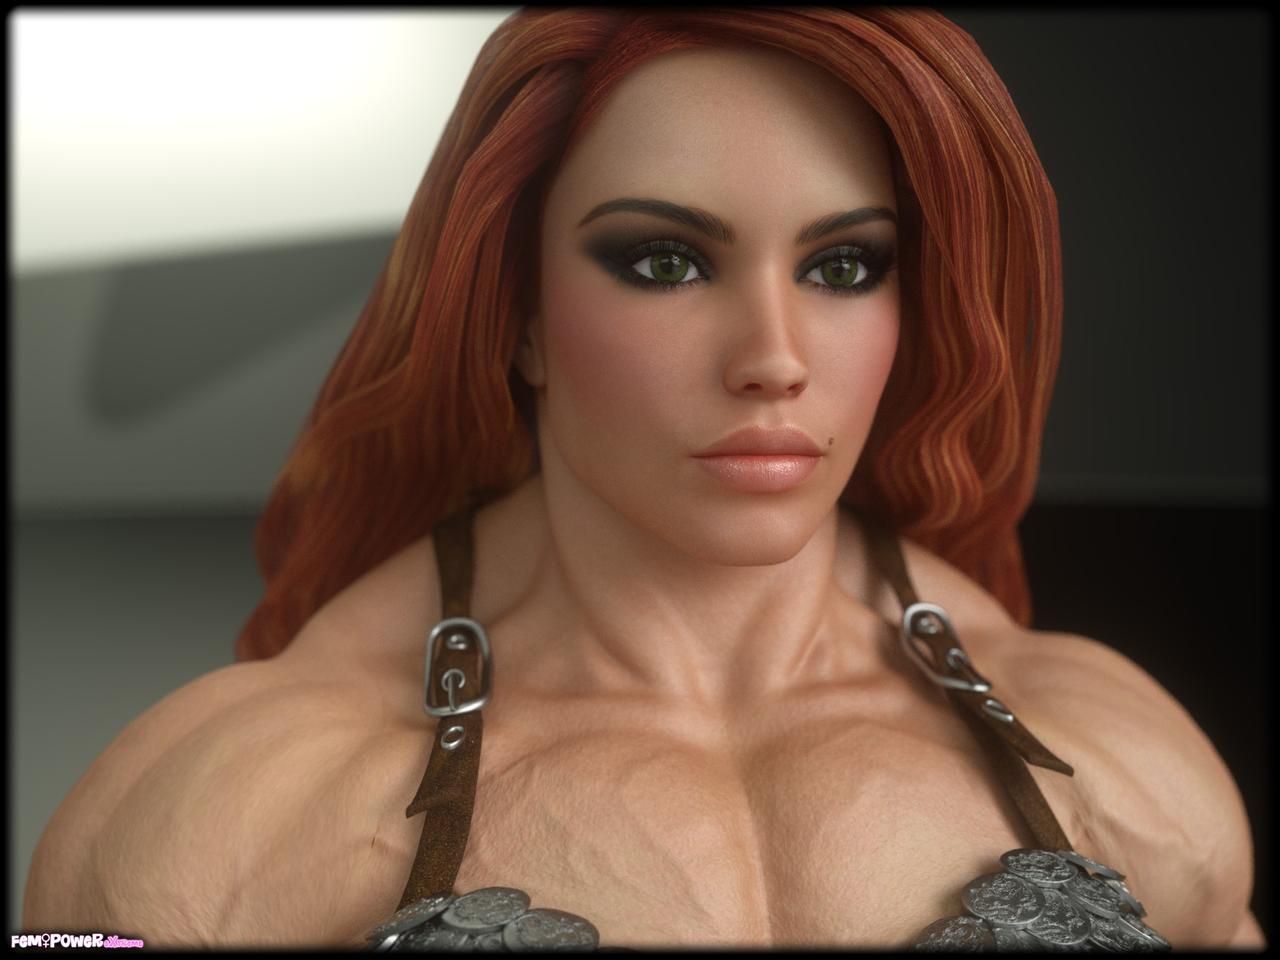 Muscle girls 3D models_ part 2 by Tigersan 171